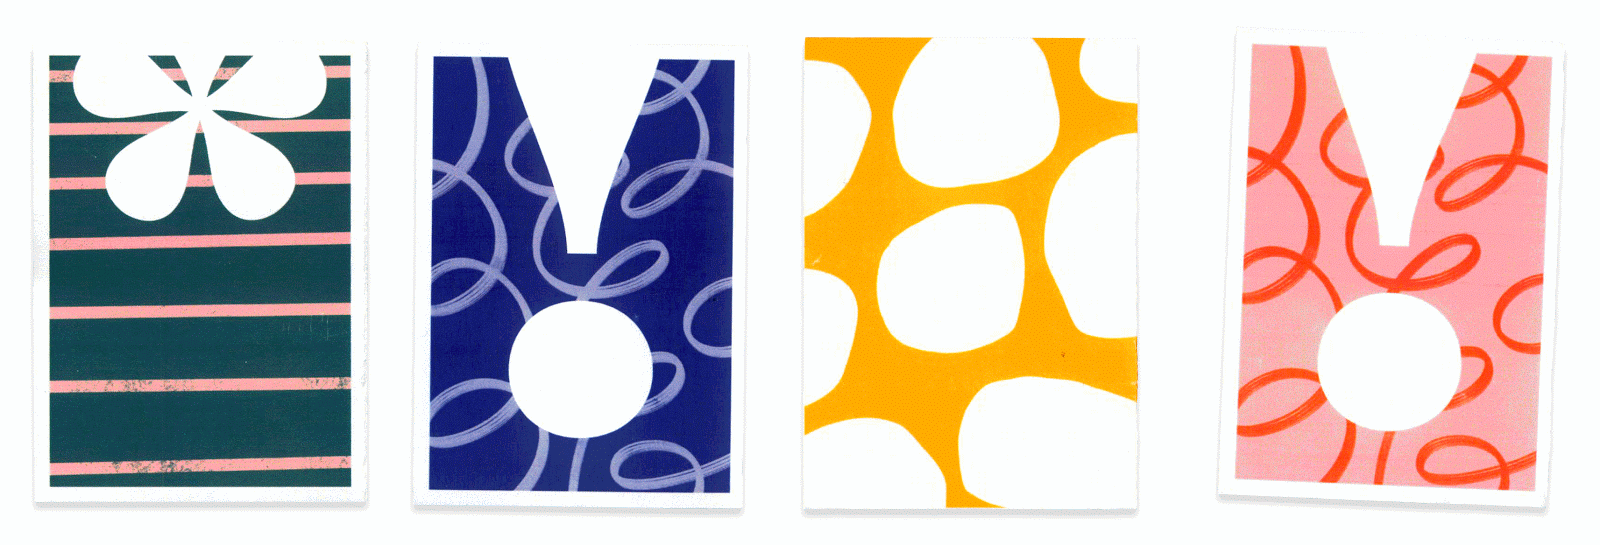 Different sets of patterned designs for card backs.